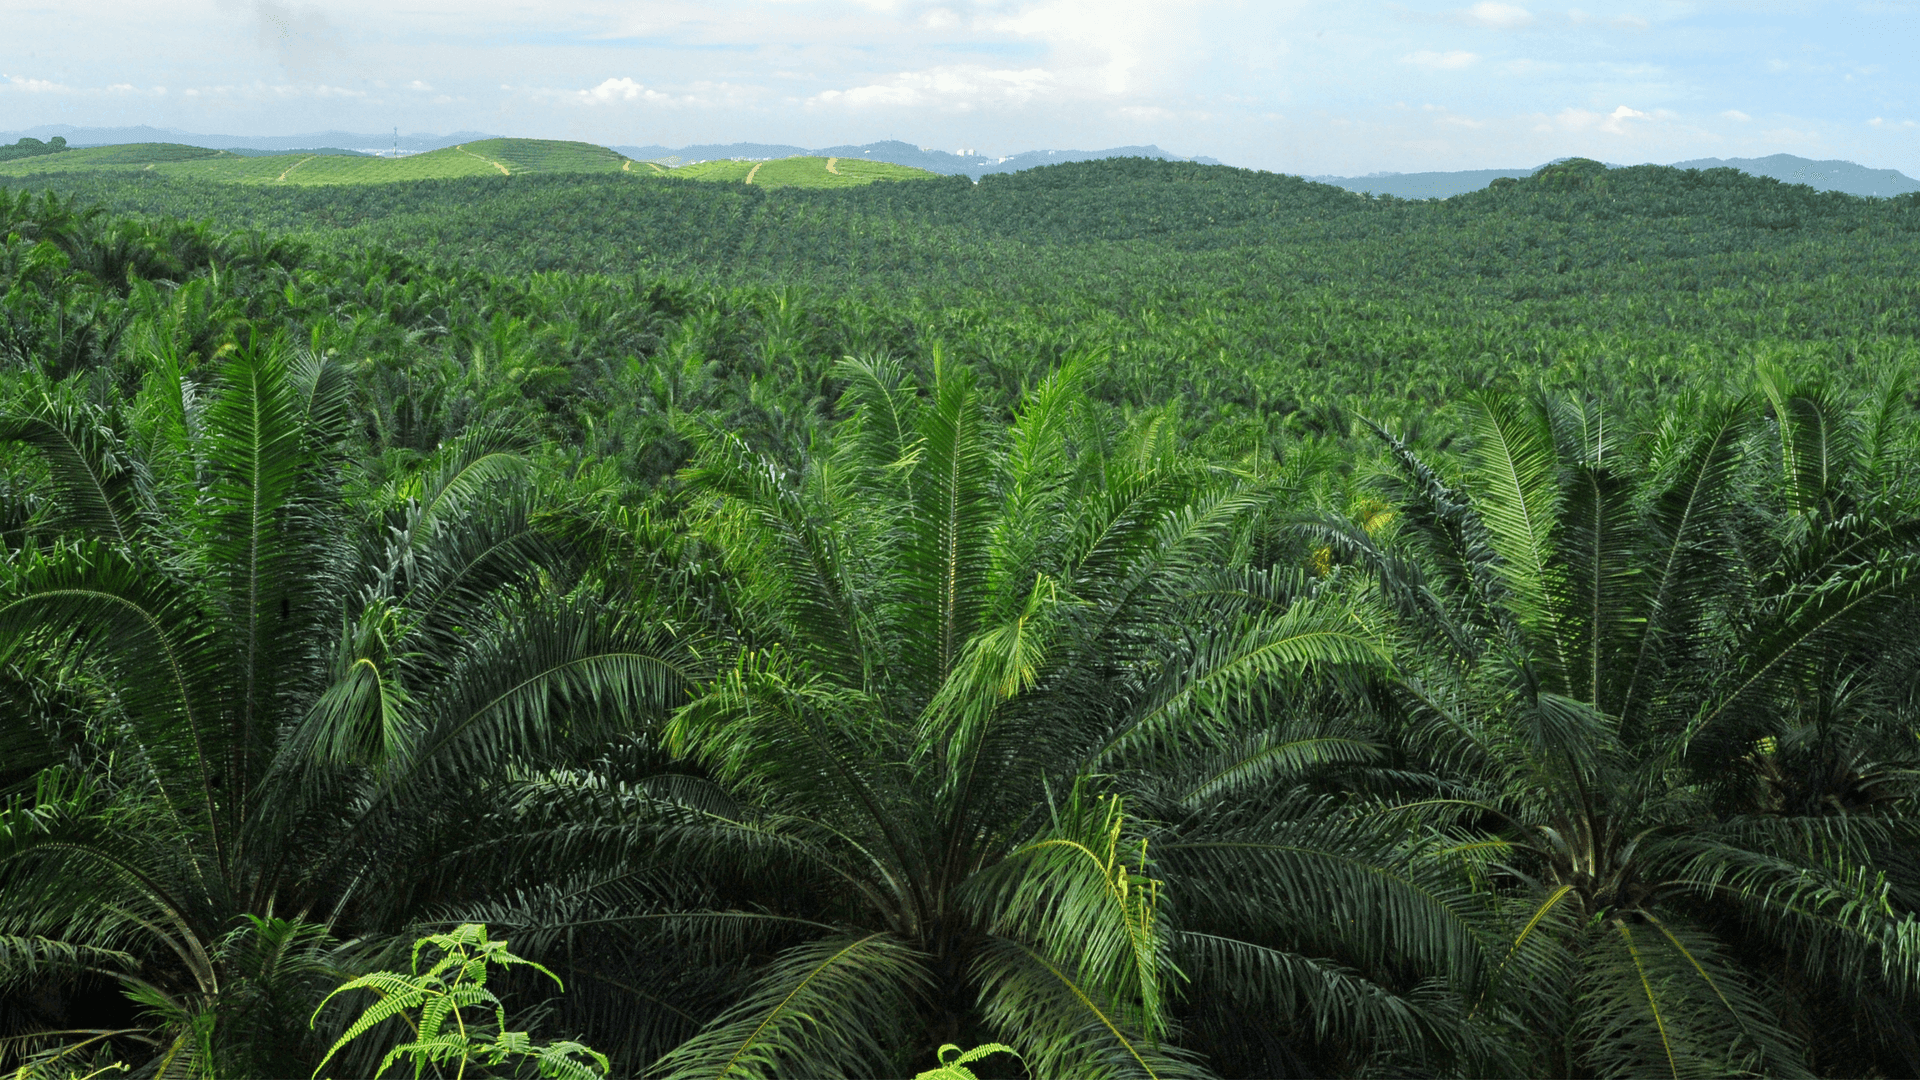 Organized plantations